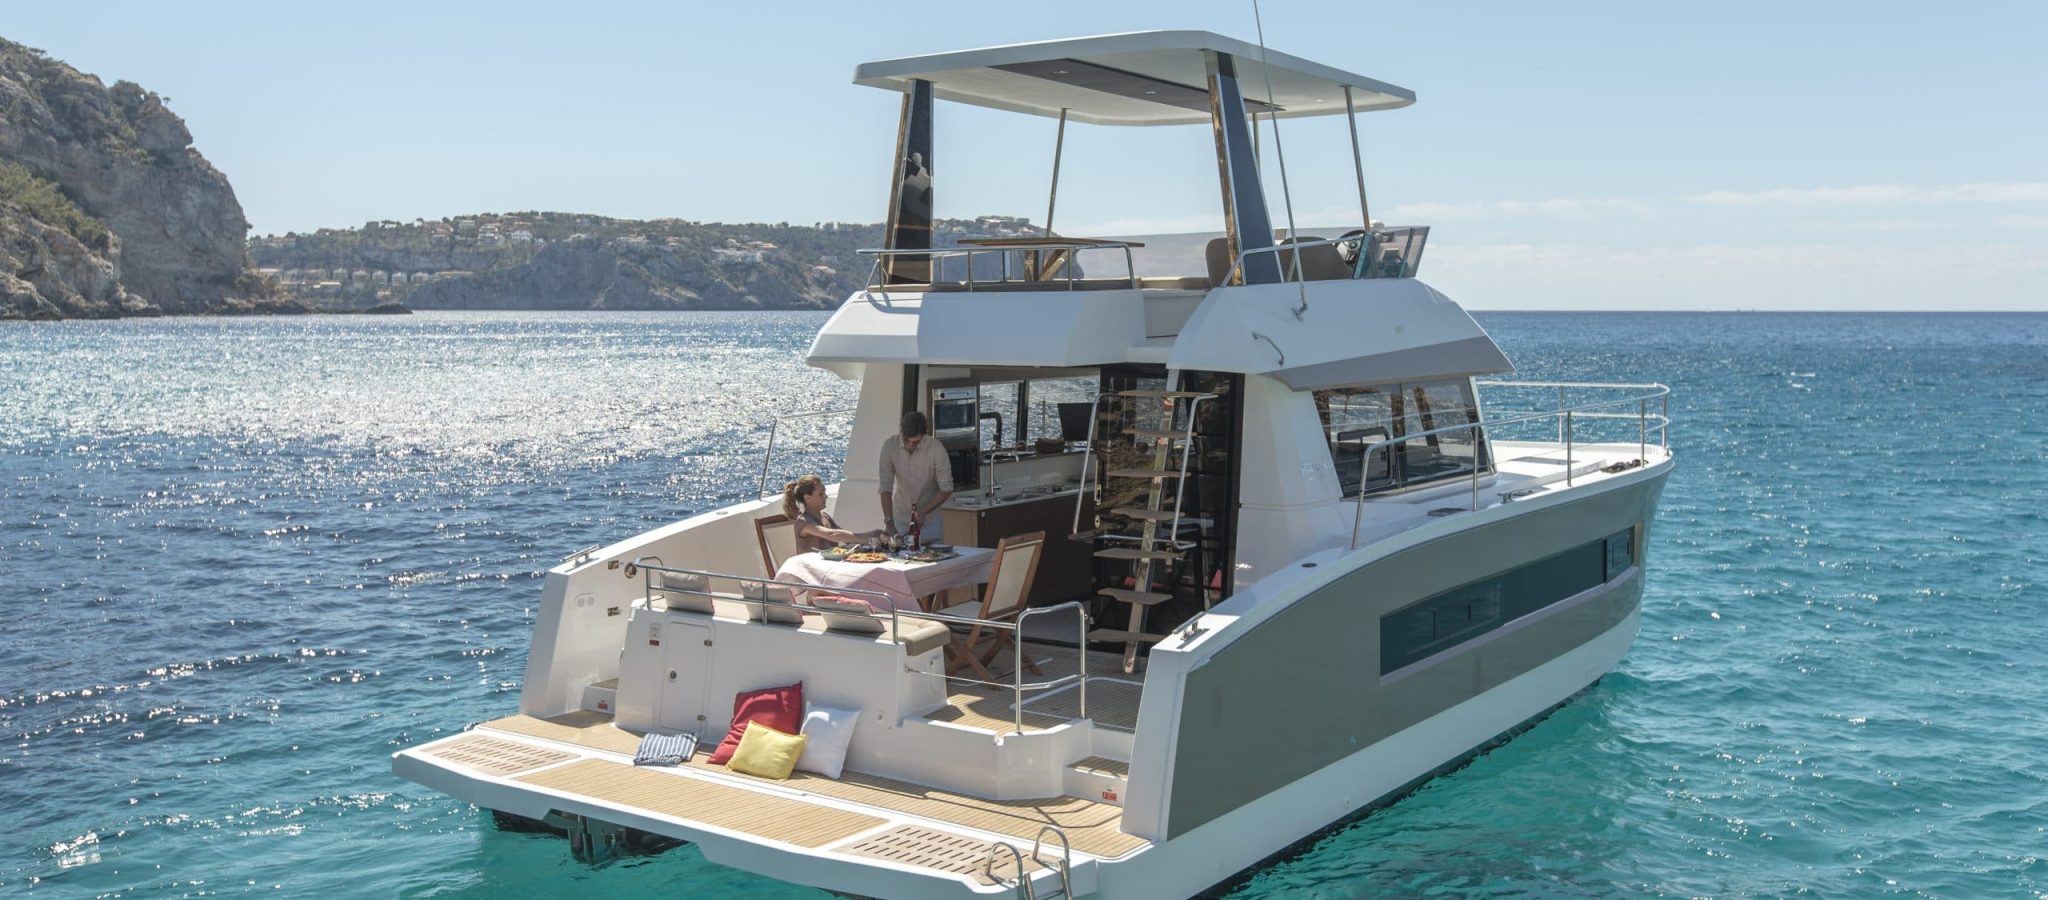 08/04/2015, Andraitx (Isla de Mallorca, Islas Baleares, ESP), Chantier Fountaine-Pajot, Motor Yacht 37